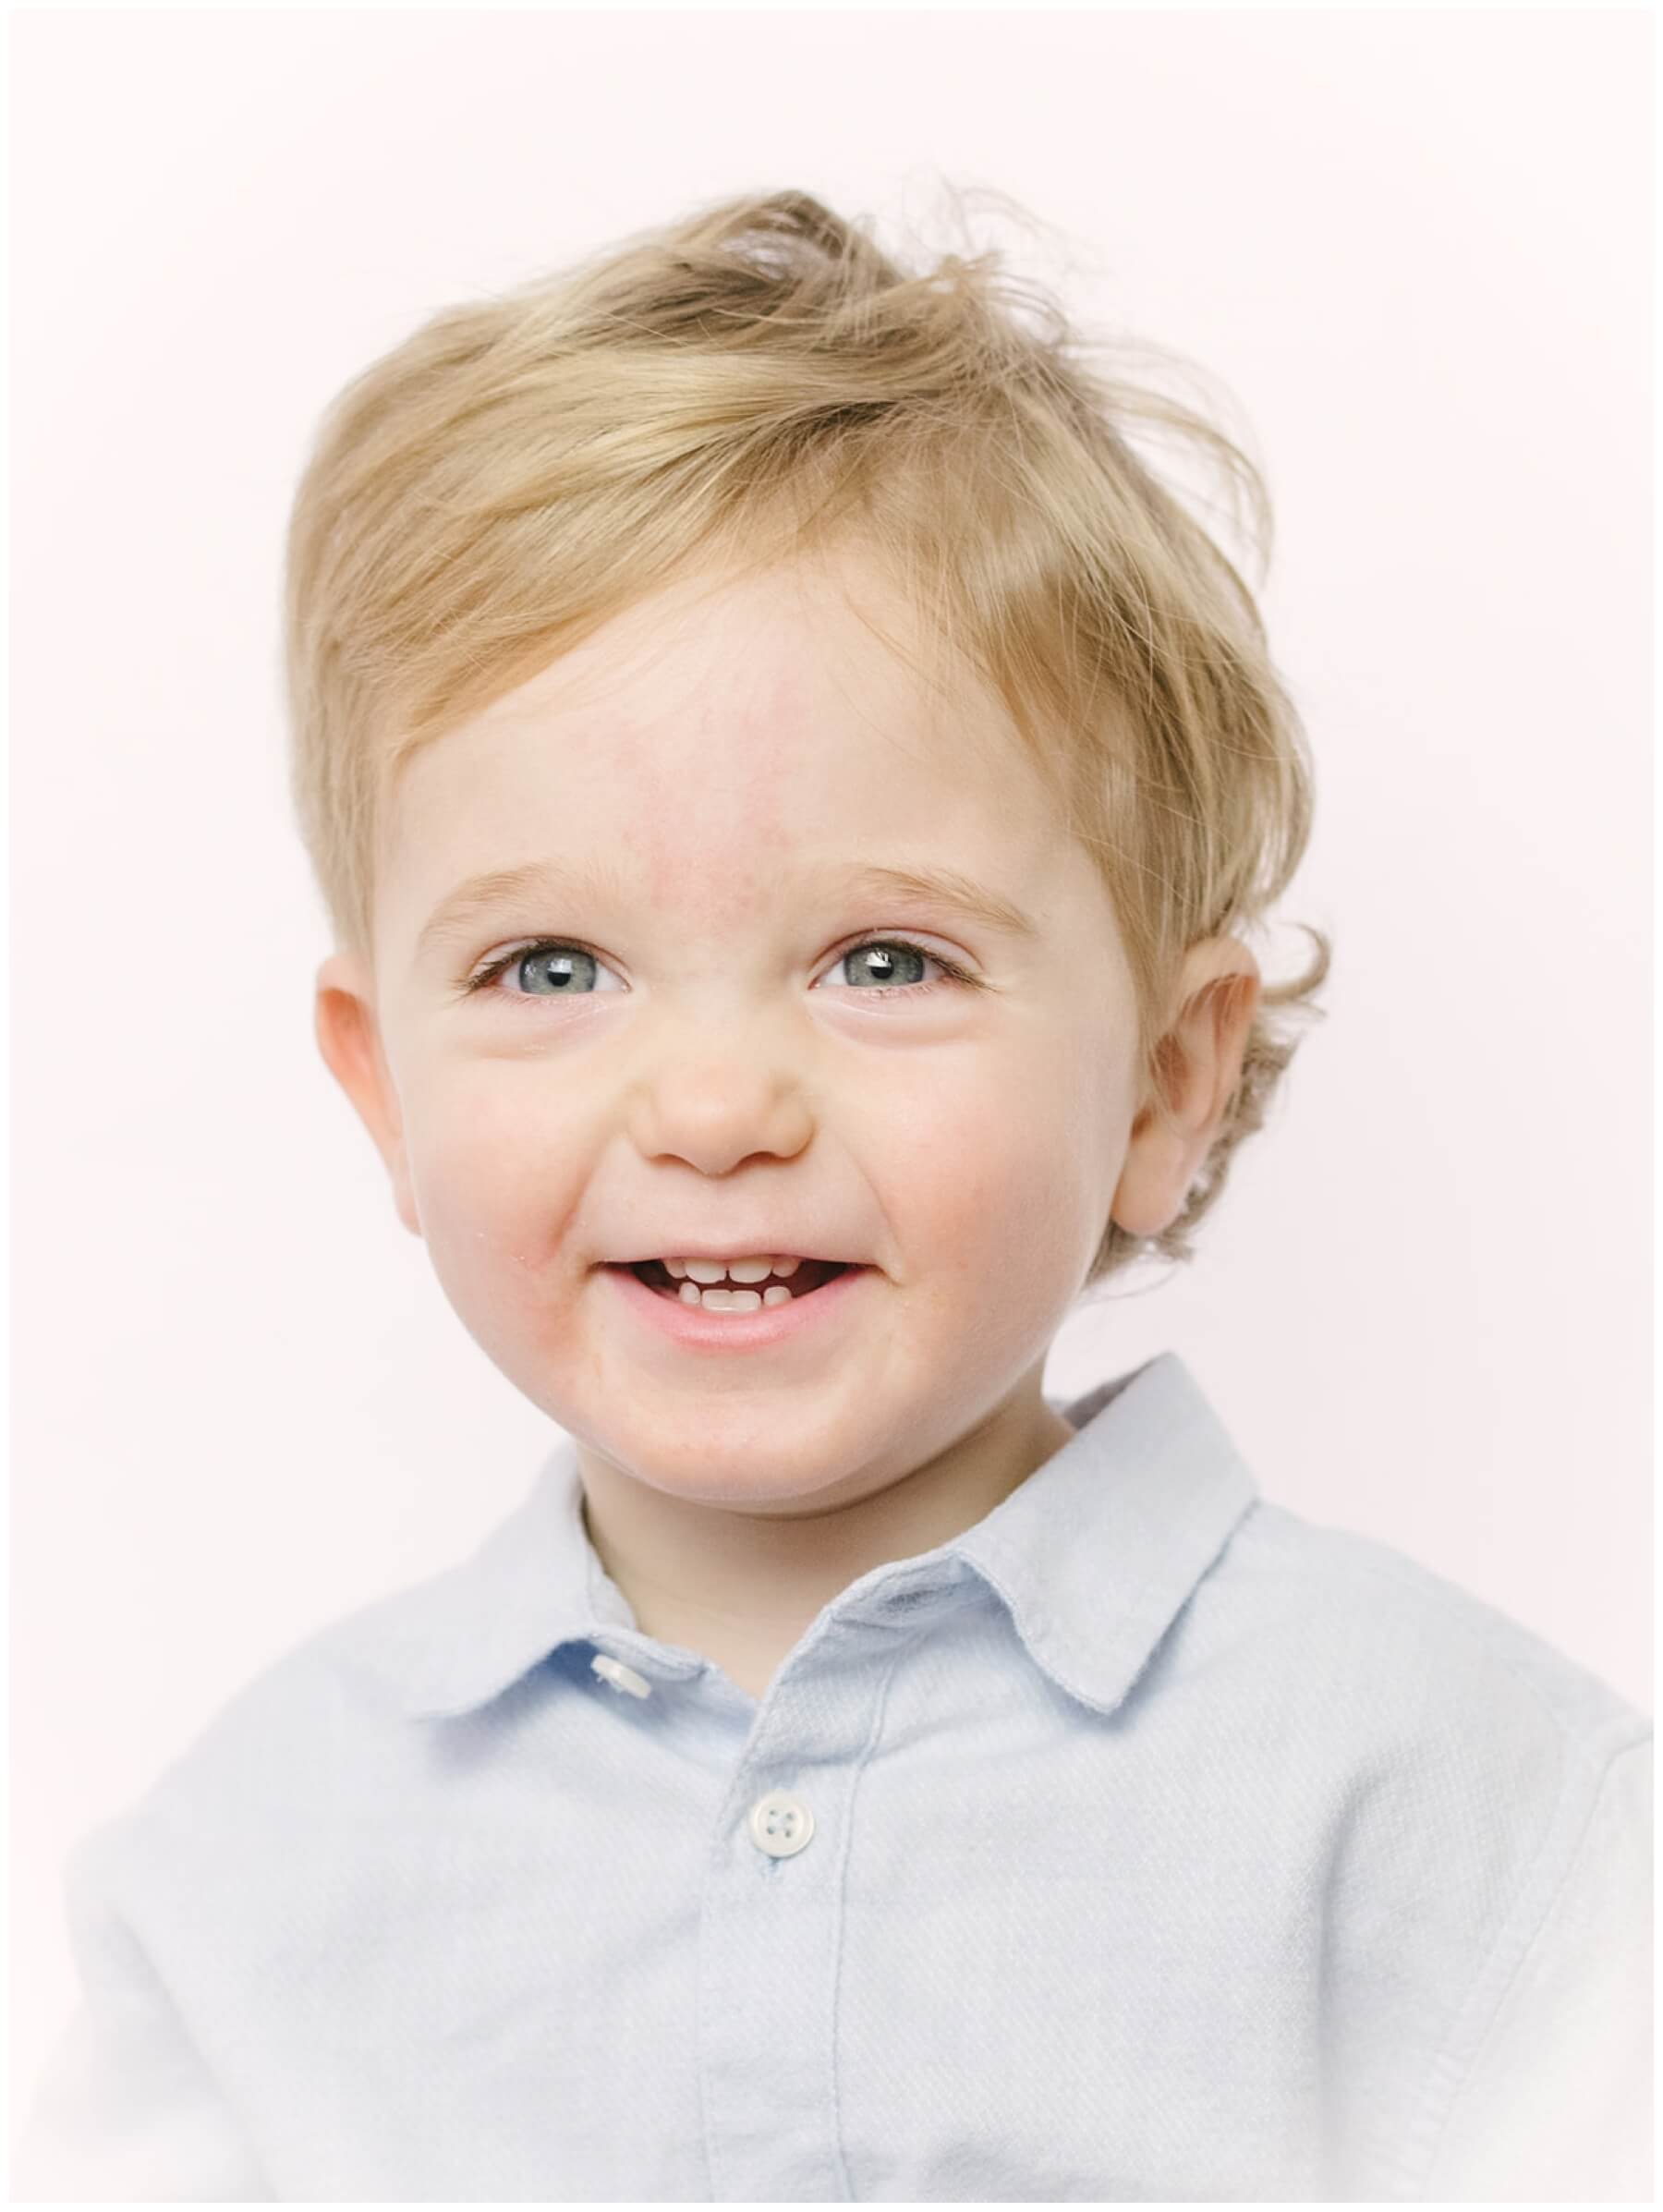 Heirloom portrait of toddler boy in blue shirt | NKB Photo